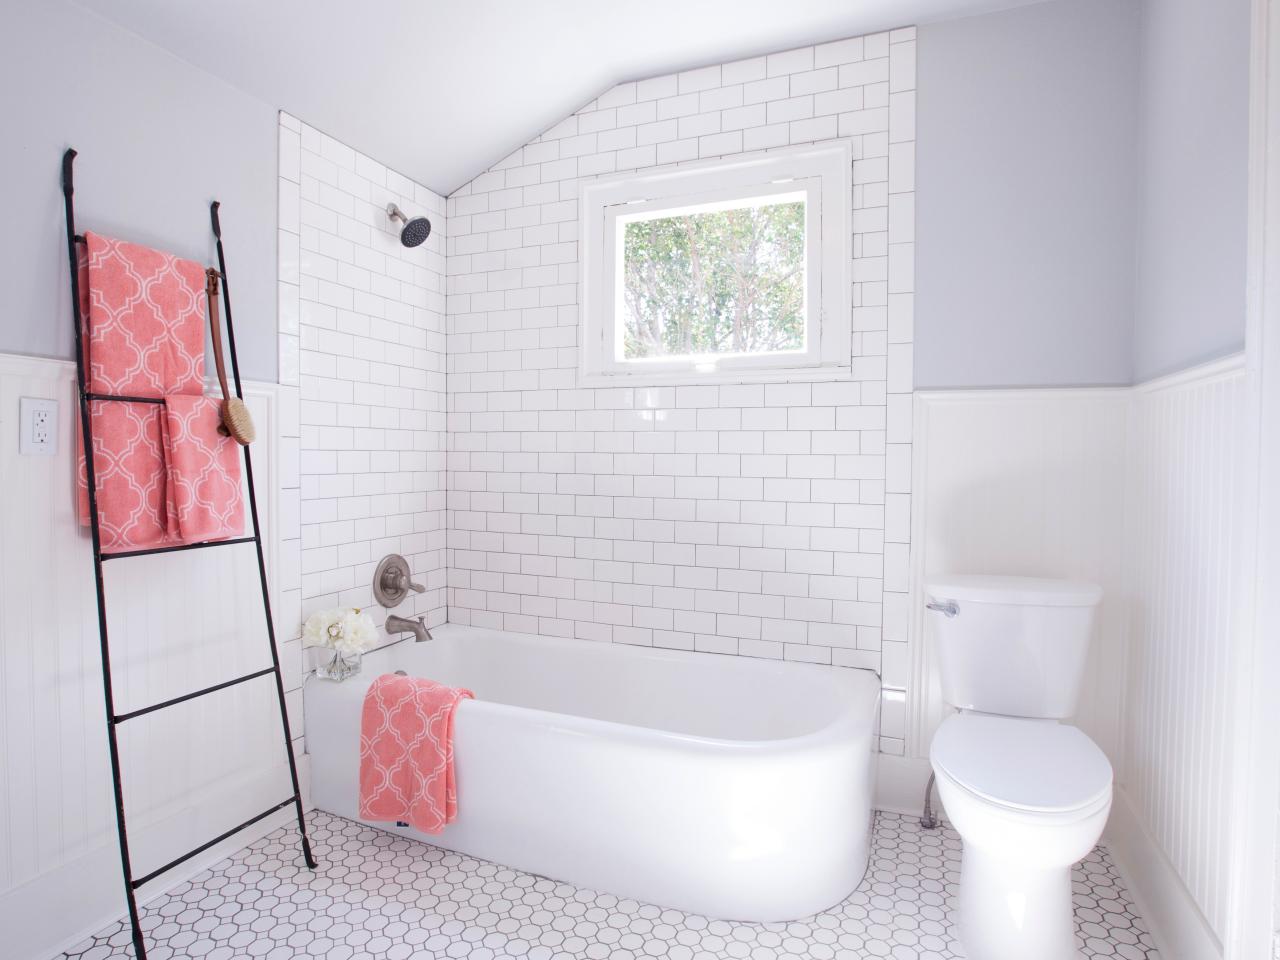 Ceramic Tile Flooring Tips Diy, Tiling A Bathroom Floor Around A Toilet